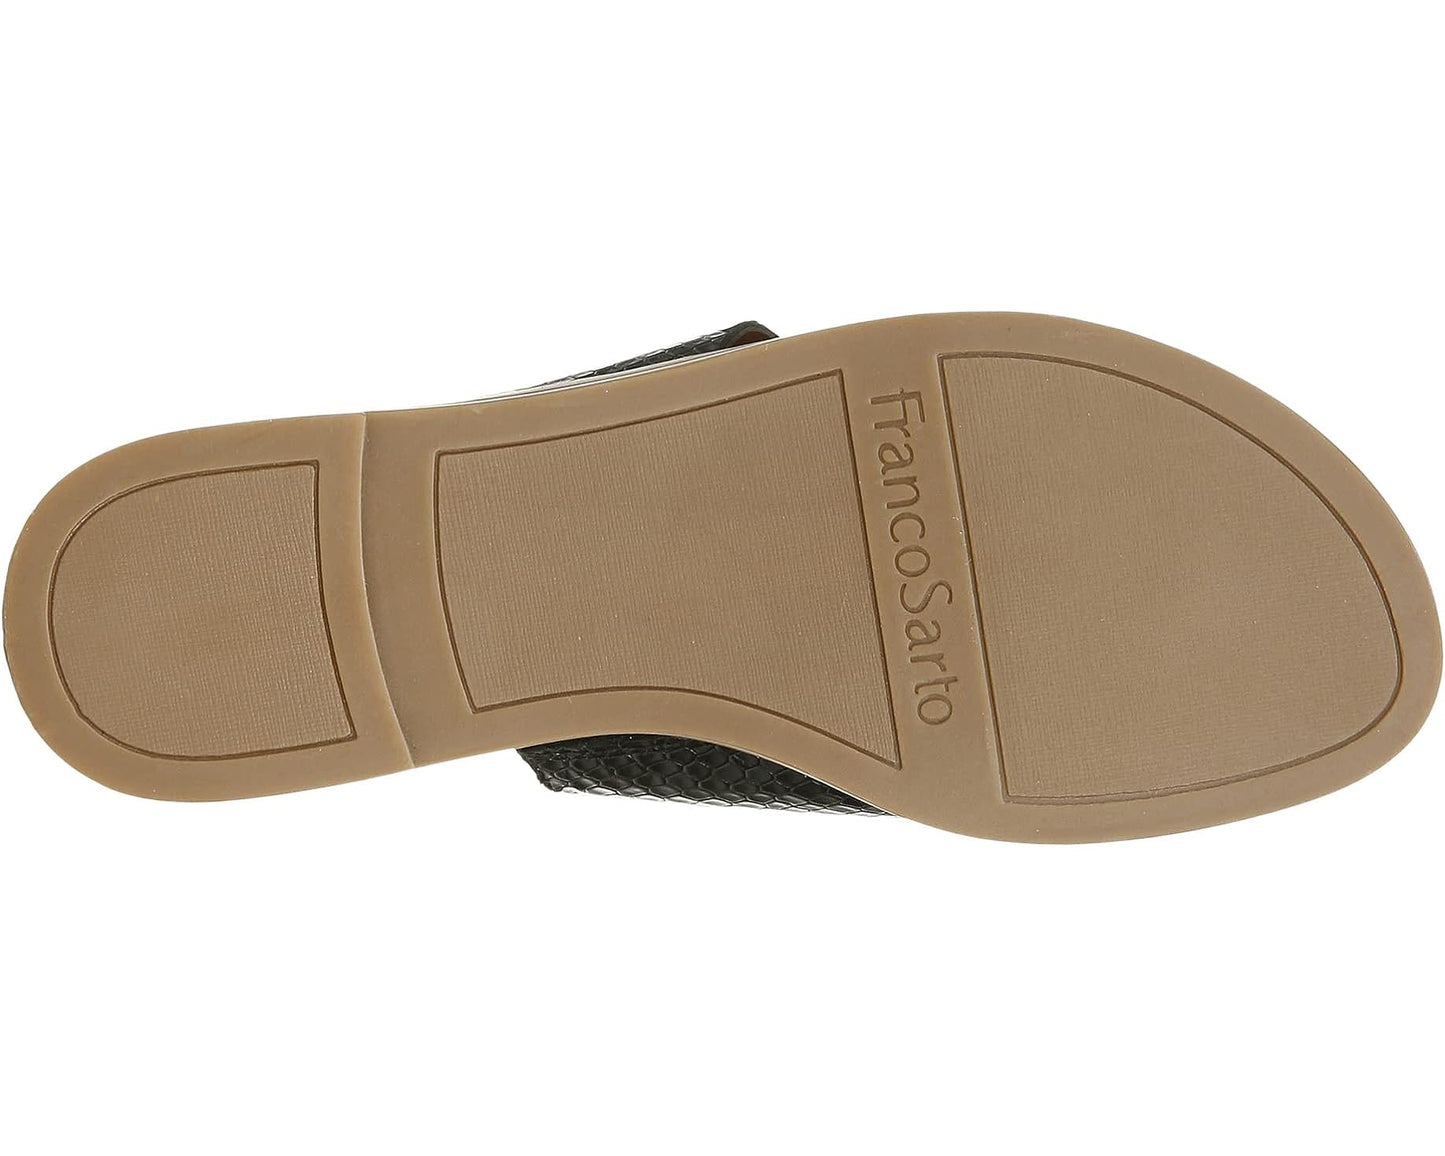 Gem Black Franco Sarto Flat Sandals